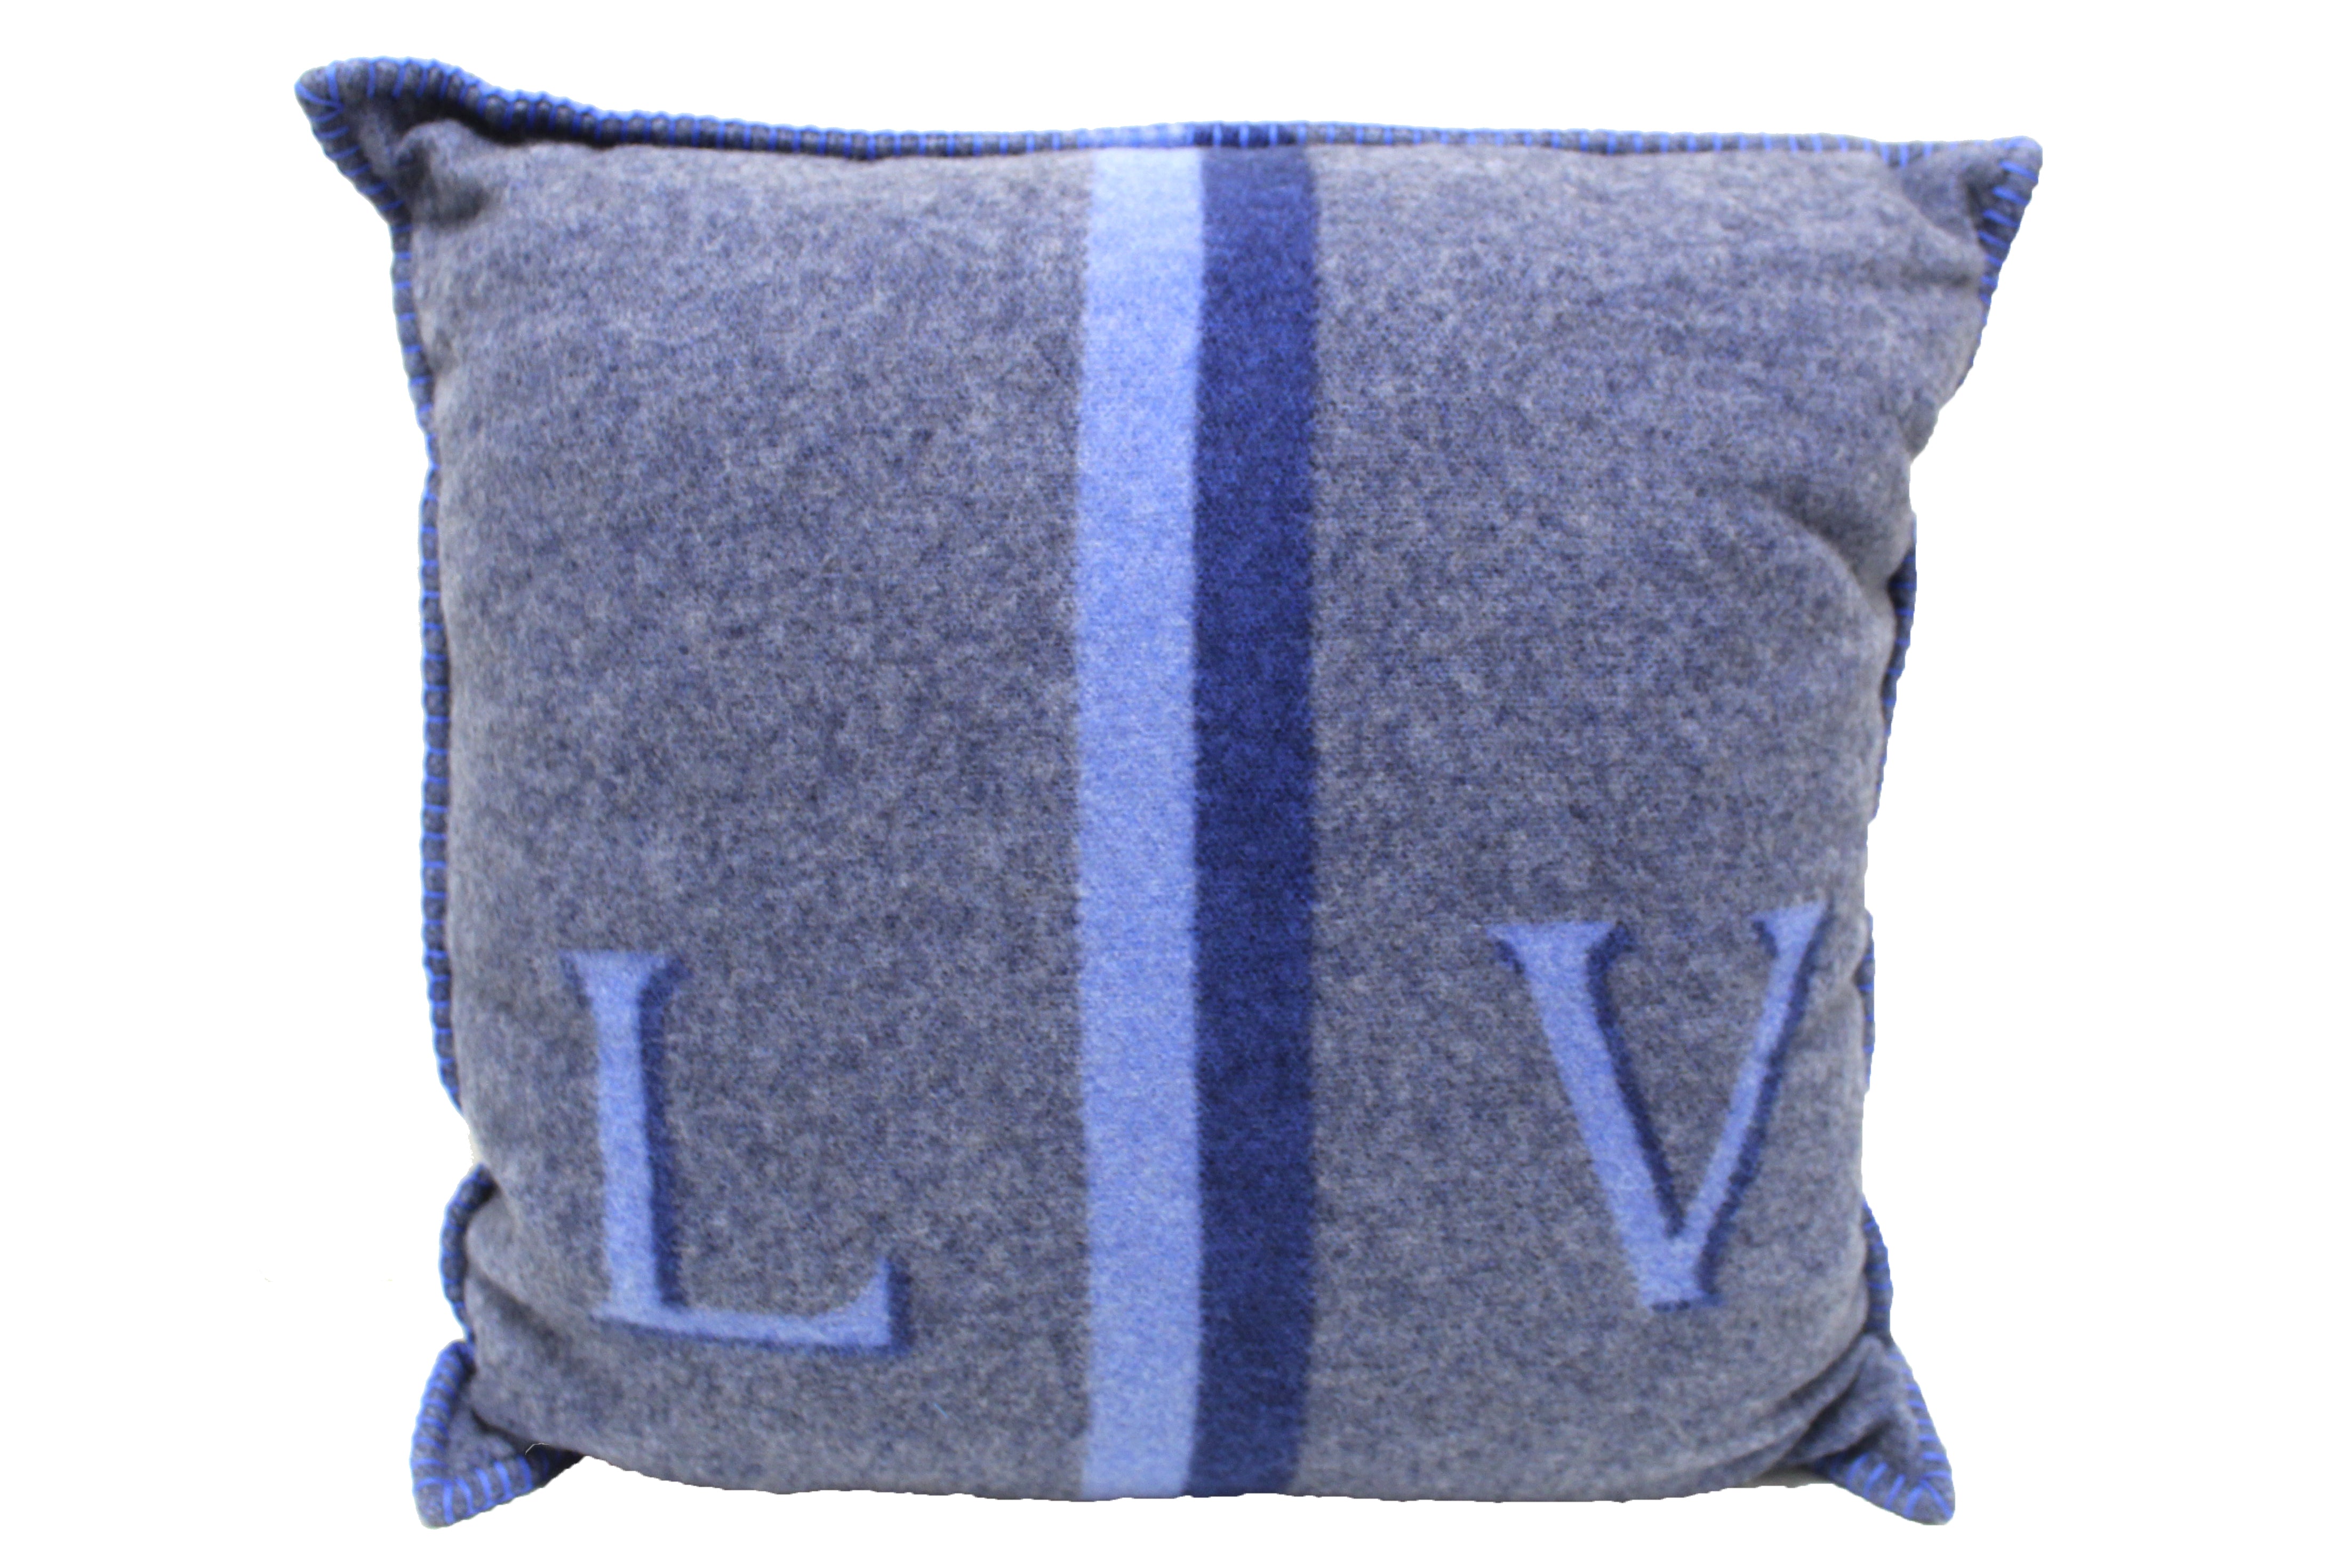 LV pillow